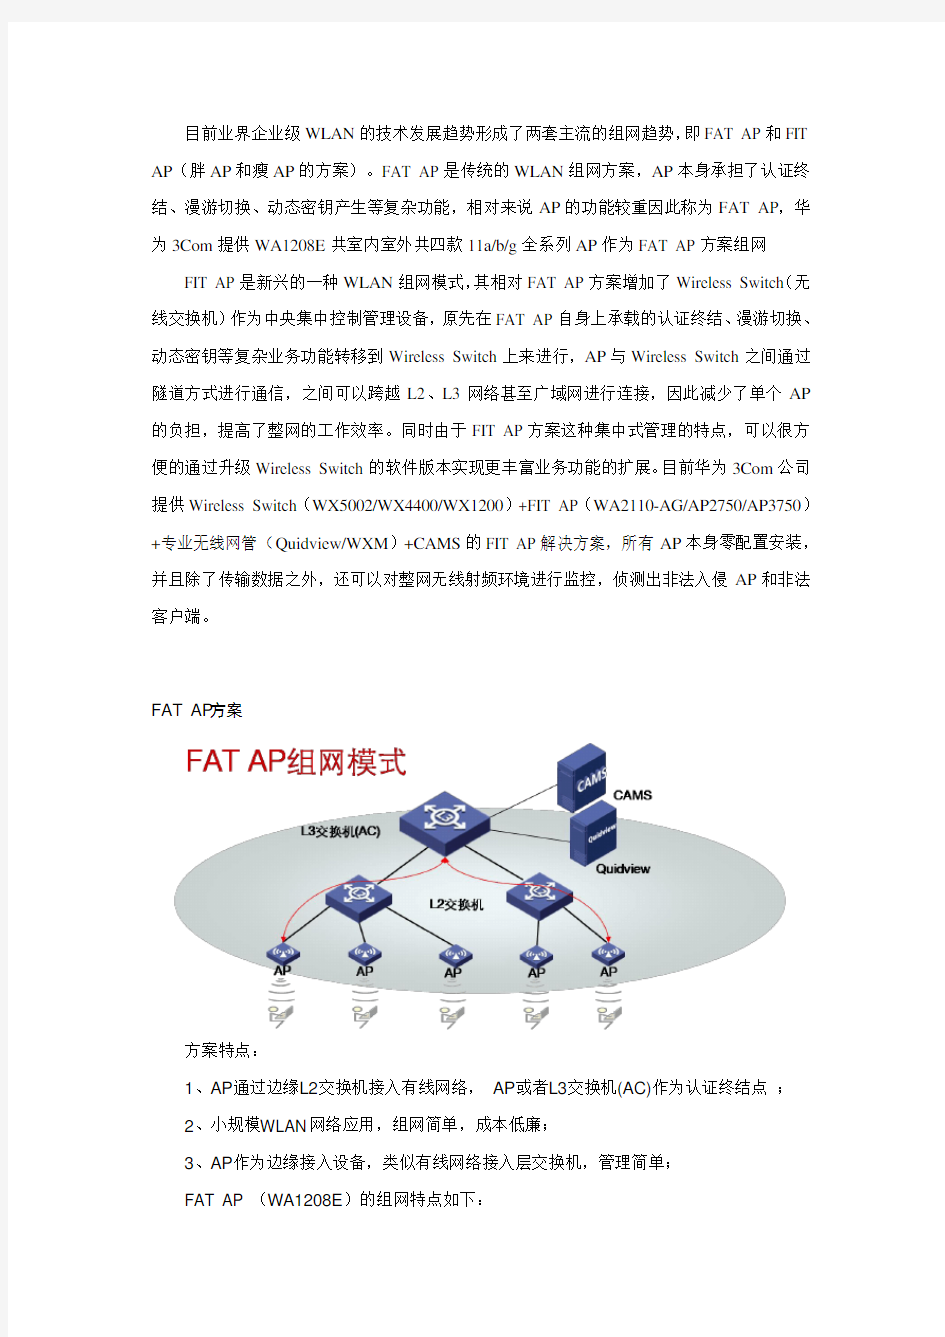 FAT AP和FIT AP两种组网模式